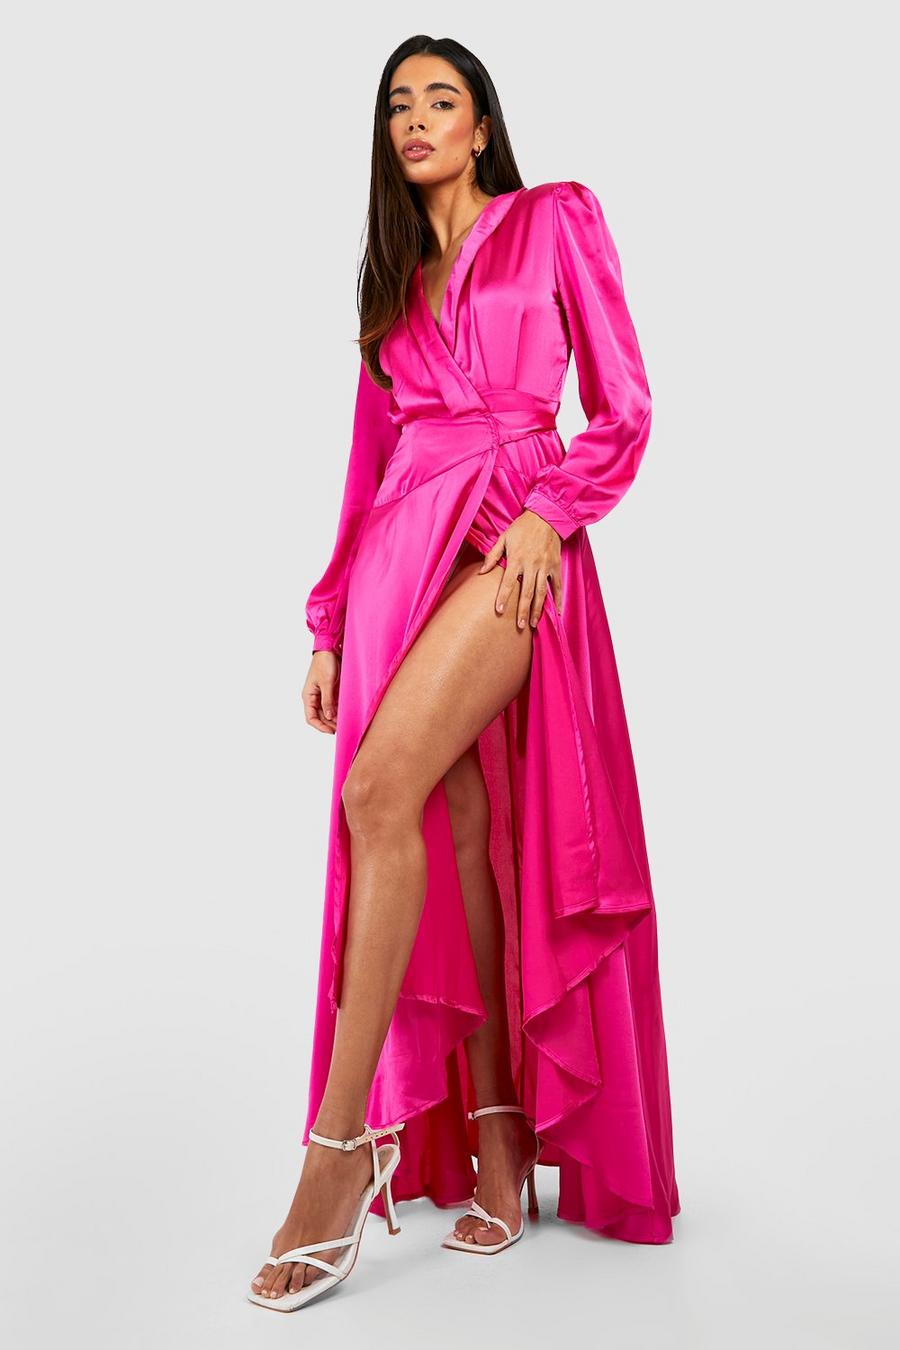 August 25th, 2013- BooHoo Canada Dress – The Pink Millennial